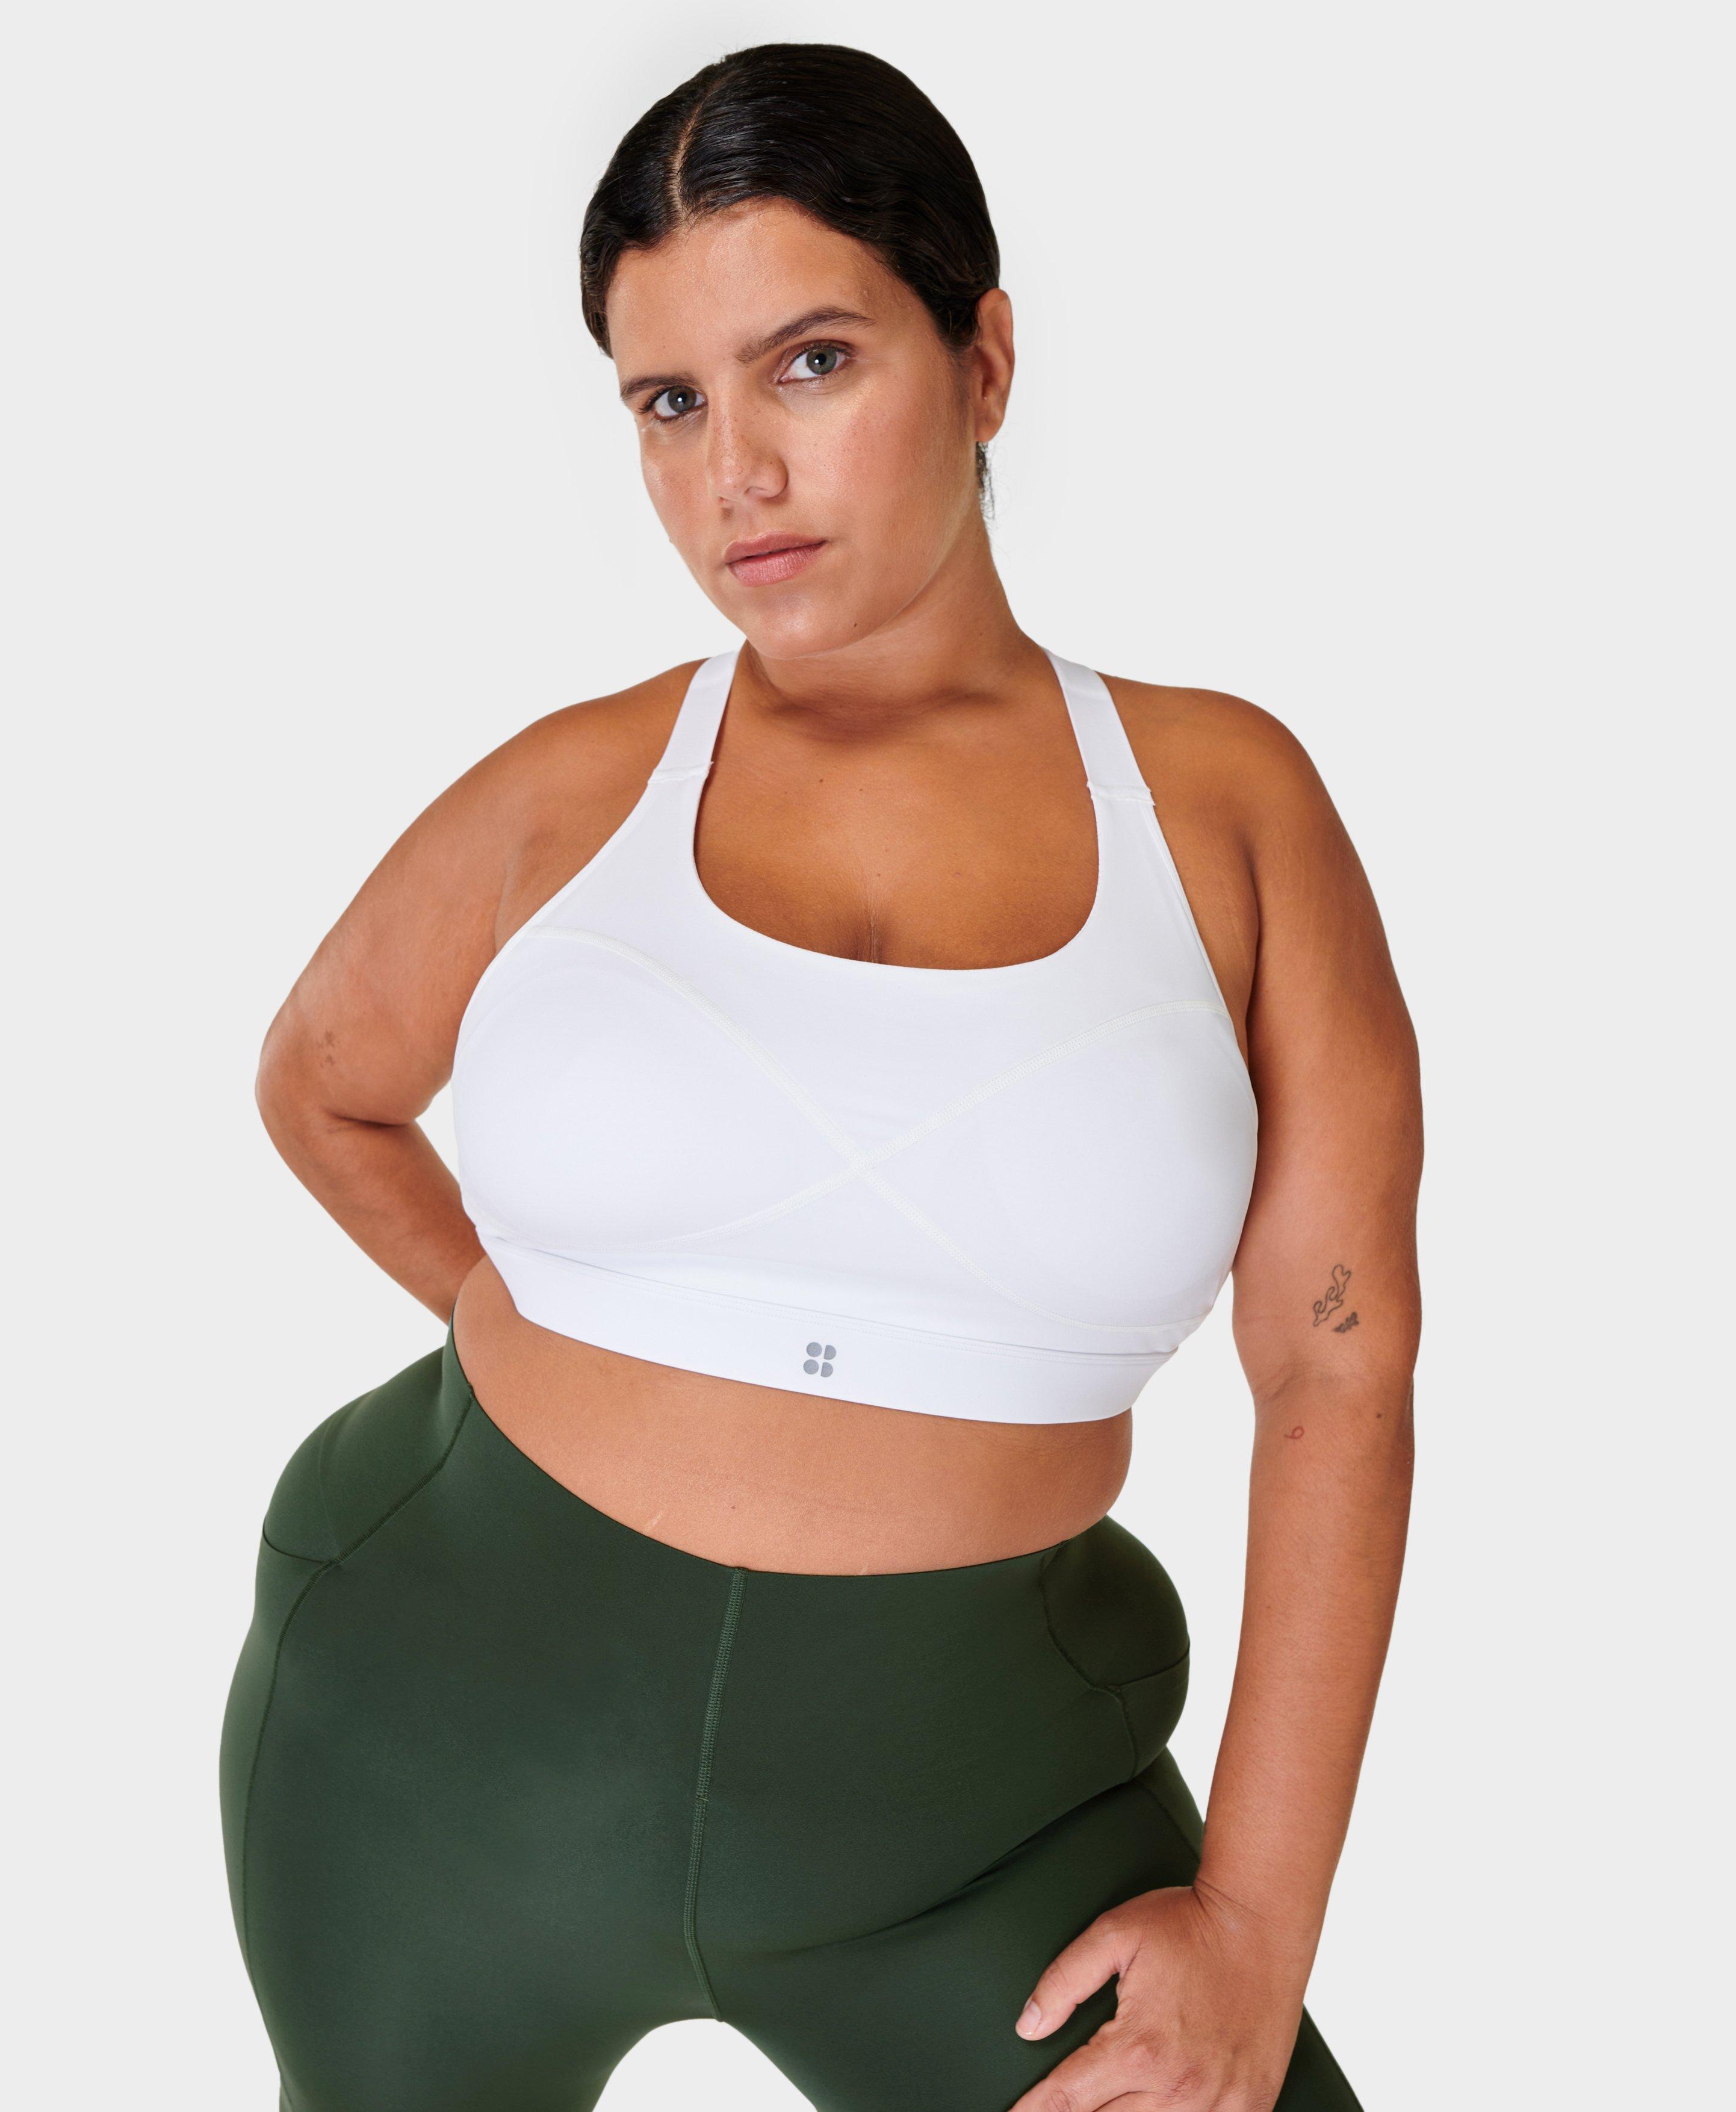 Sweaty Betty Stamina Sports Bra, size Medium, Like new - $23 - From Jude